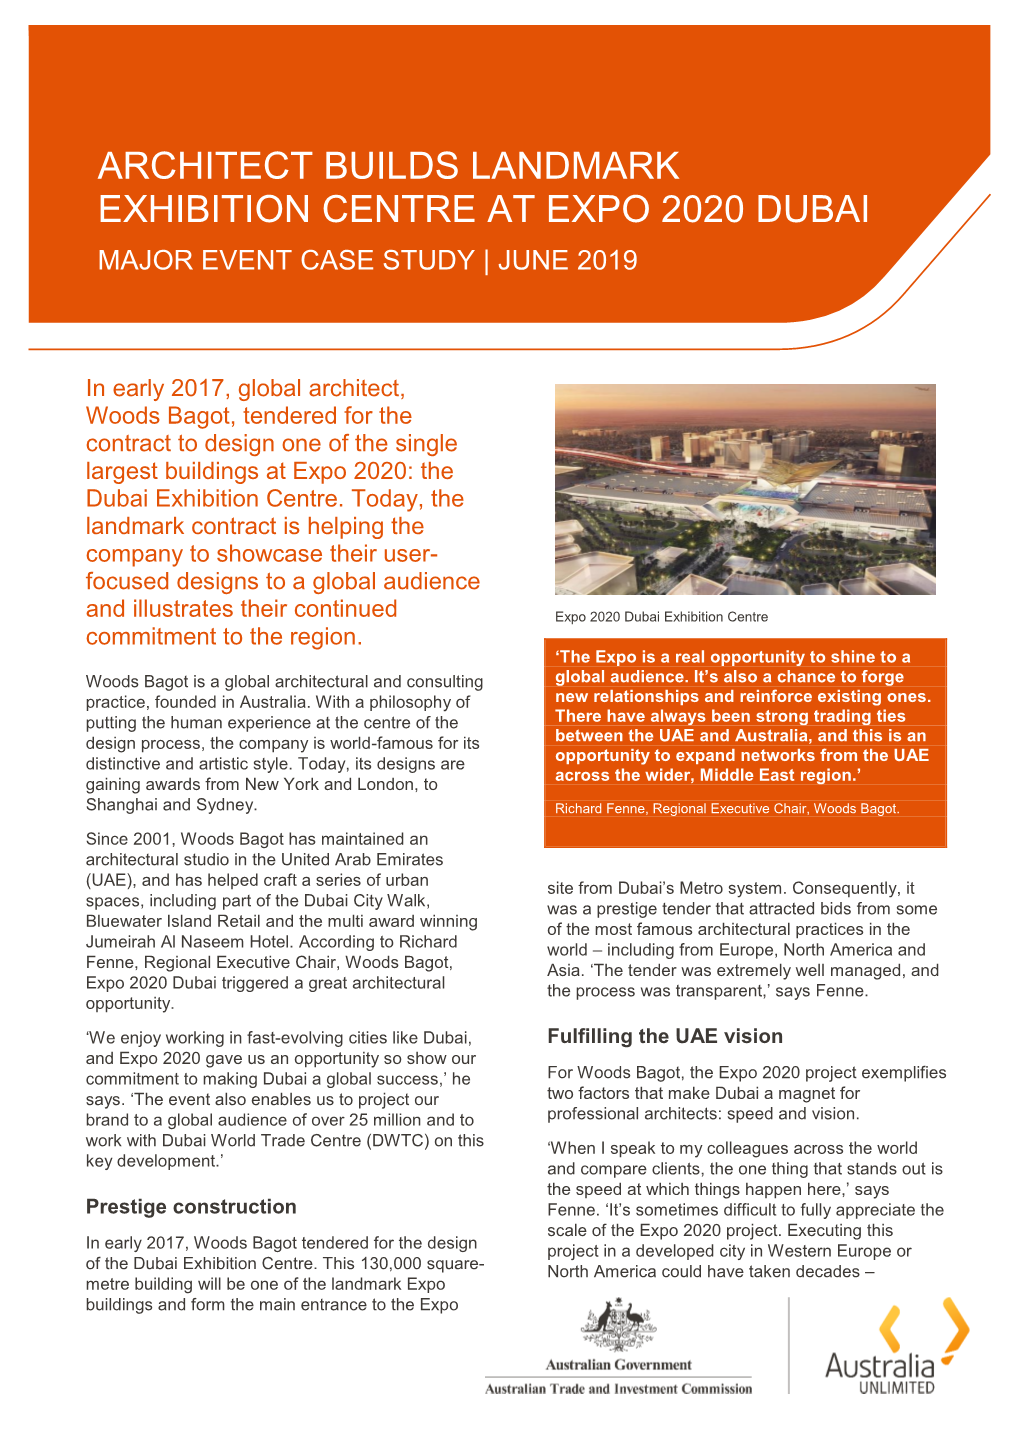 Expo 2020 Dubai Major Event Case Study | June 2019